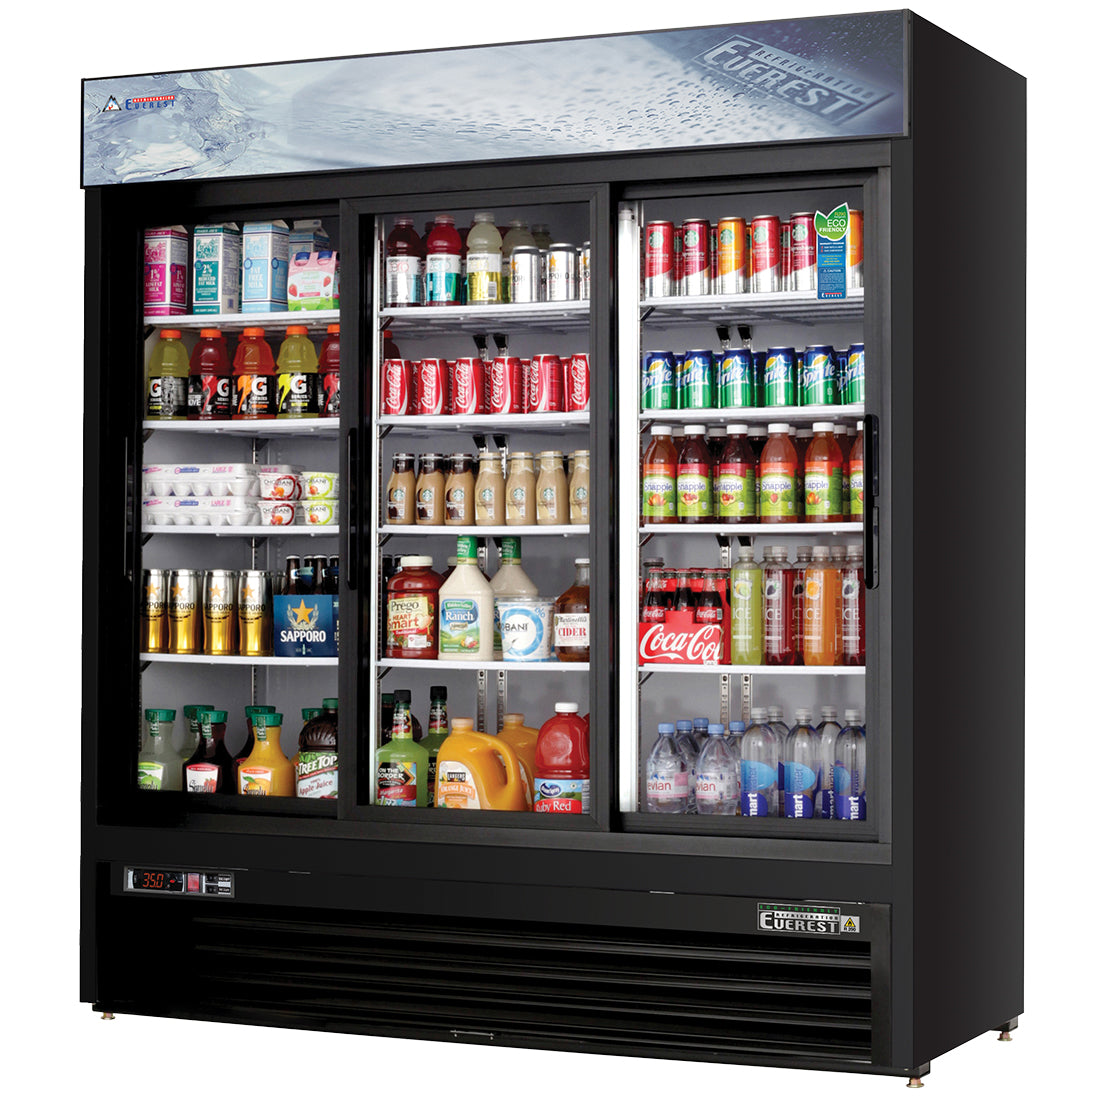 Everest 3 Door Refrigerator Merchandiser (Sliding), 69 cu ft - Black Exterior Model EMGR69B